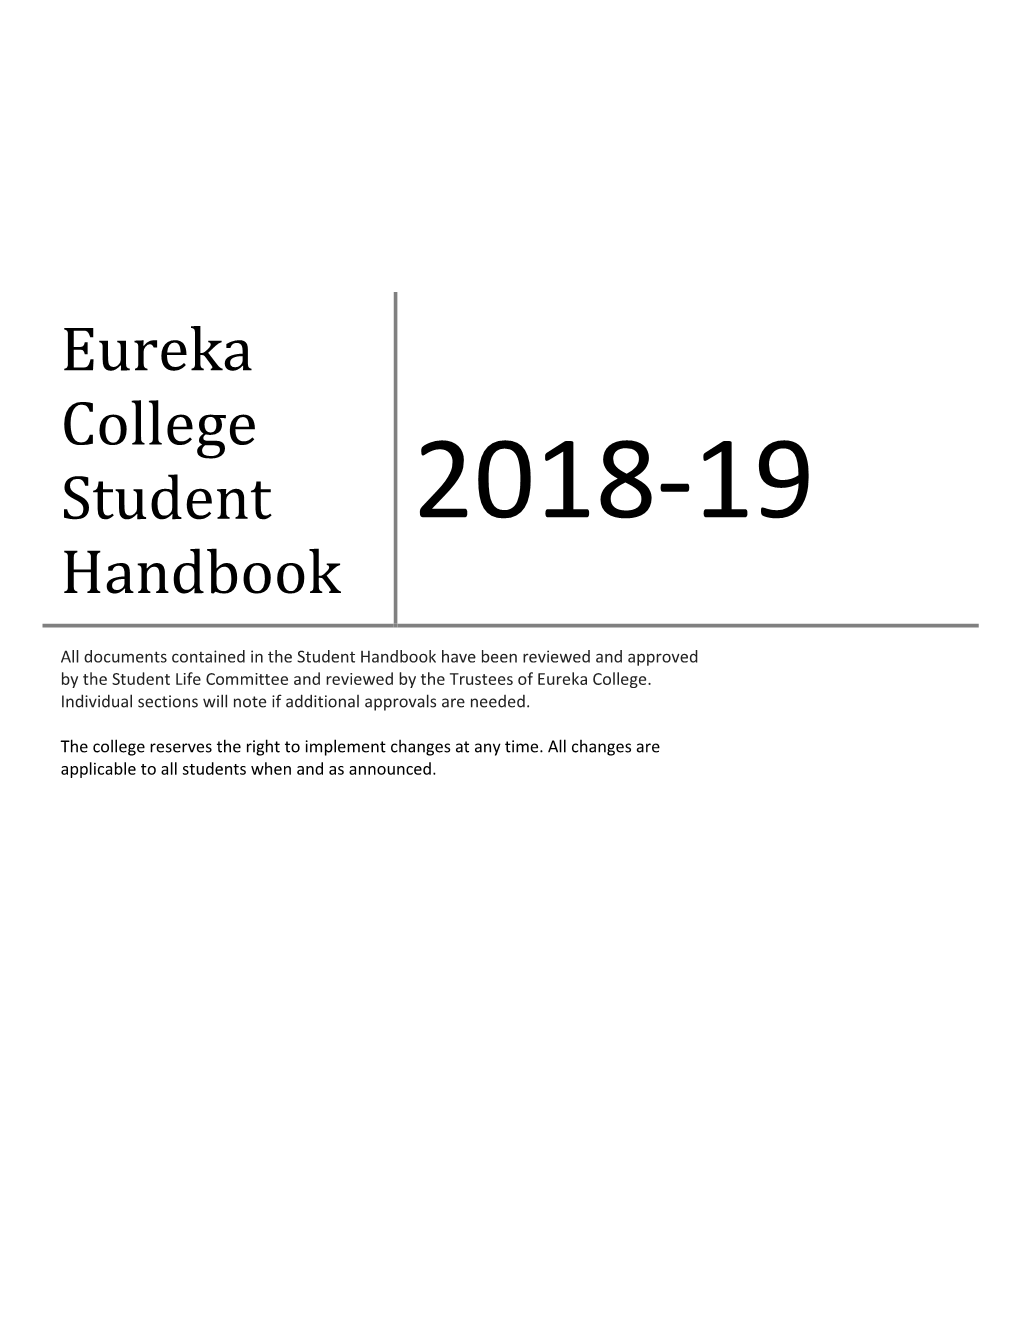 Eureka College Student Handbook